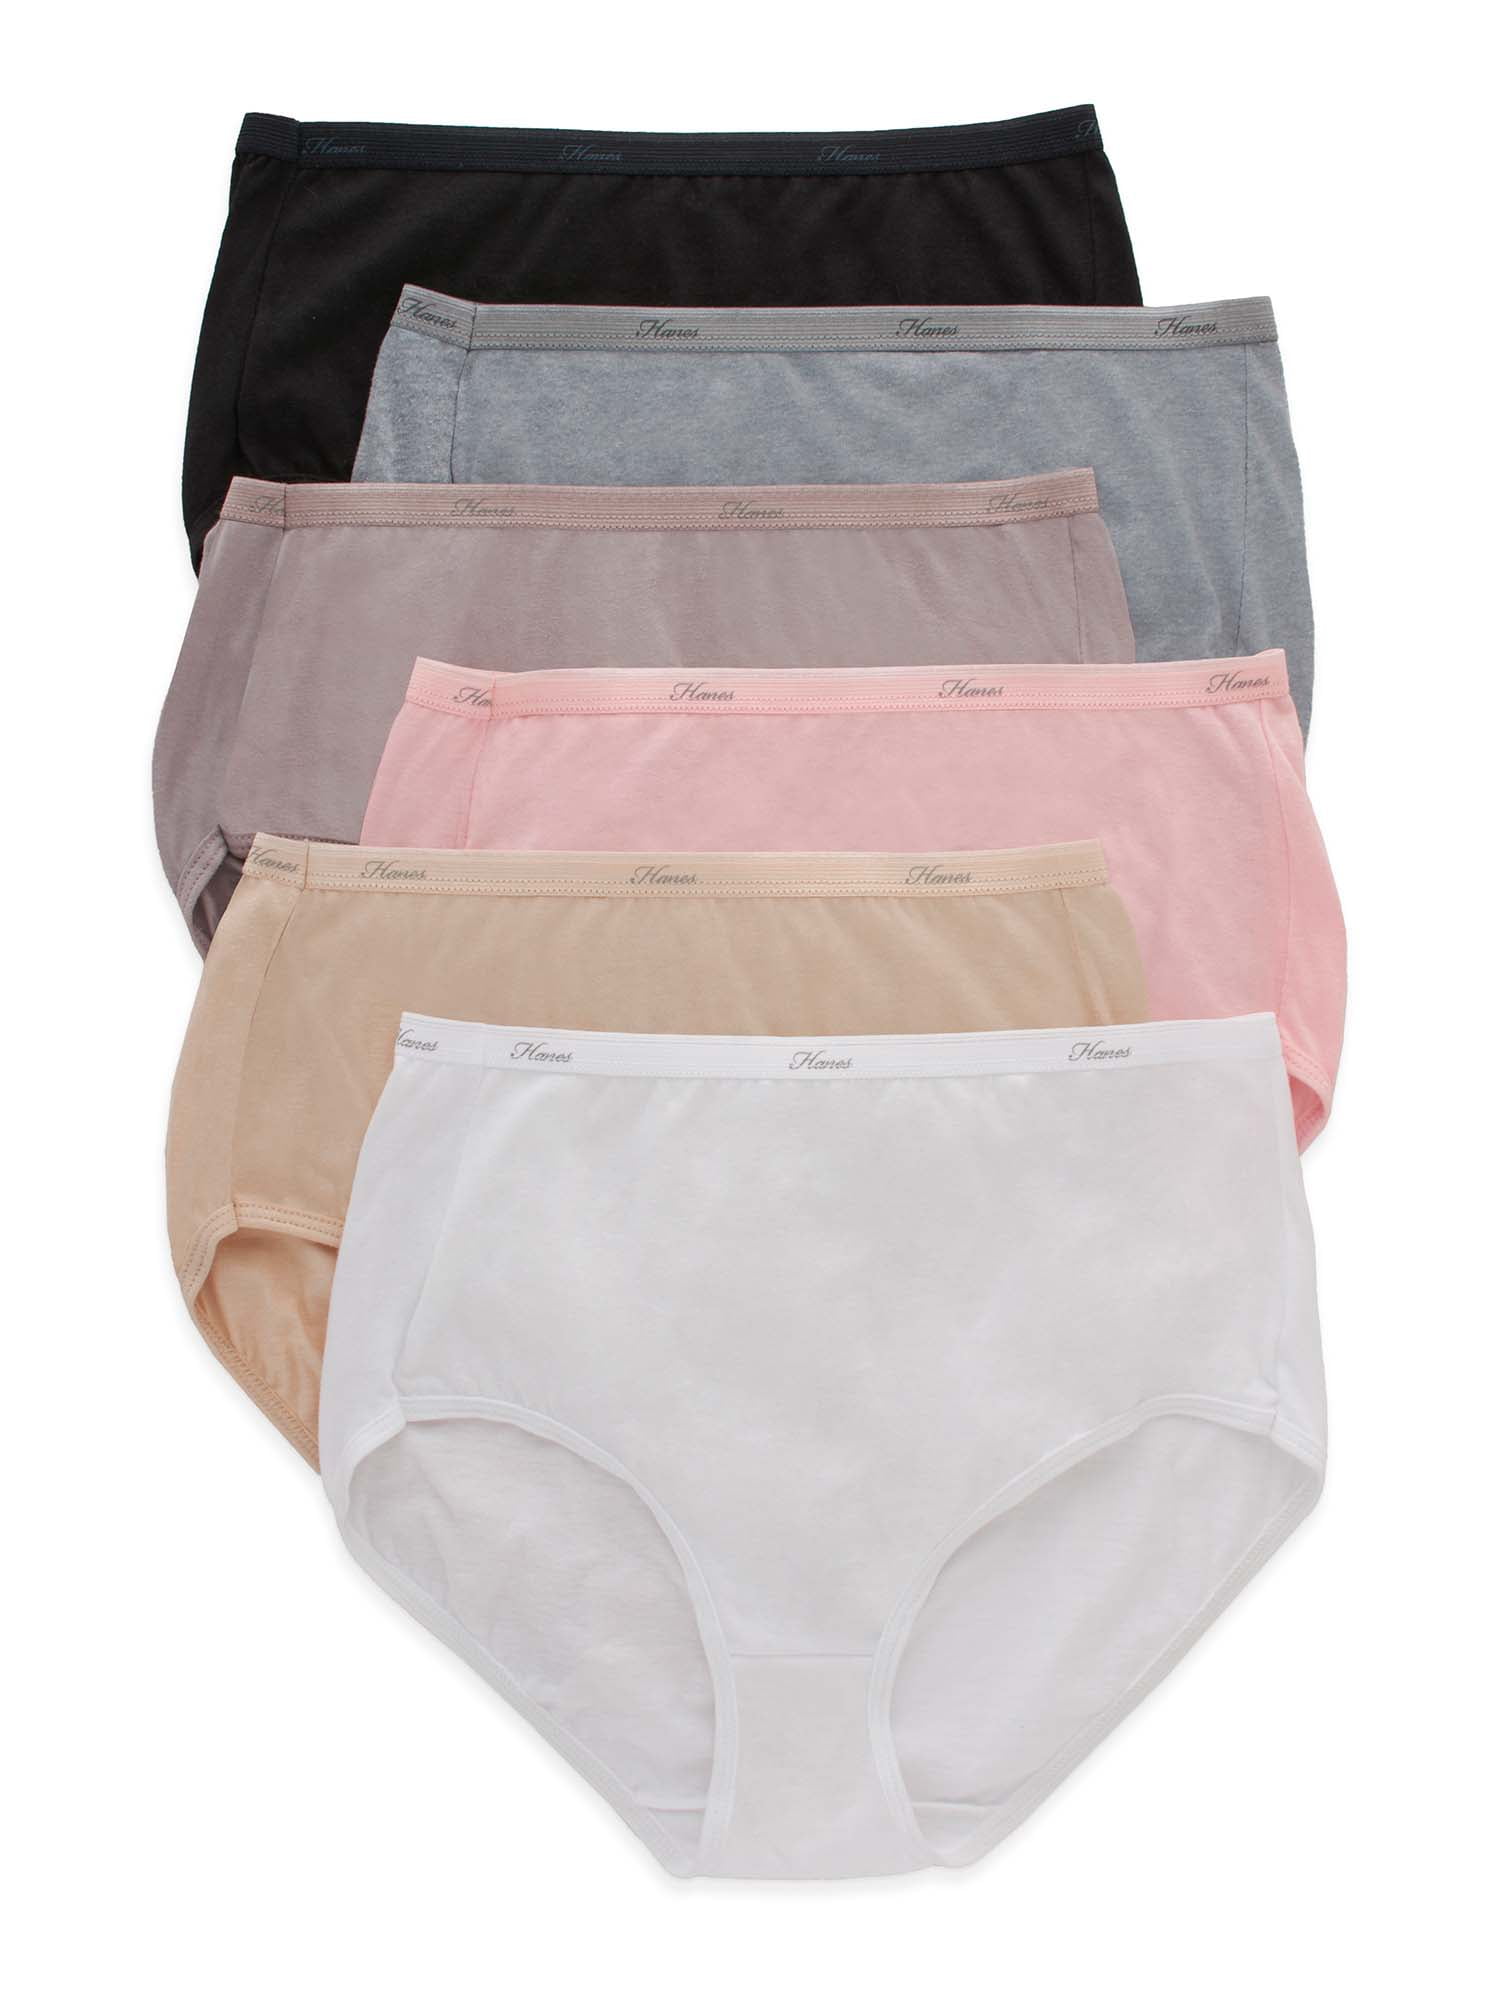 Hanes Women's Plus Size Cotton Brief Panties Multi-Packs, 6 Pack